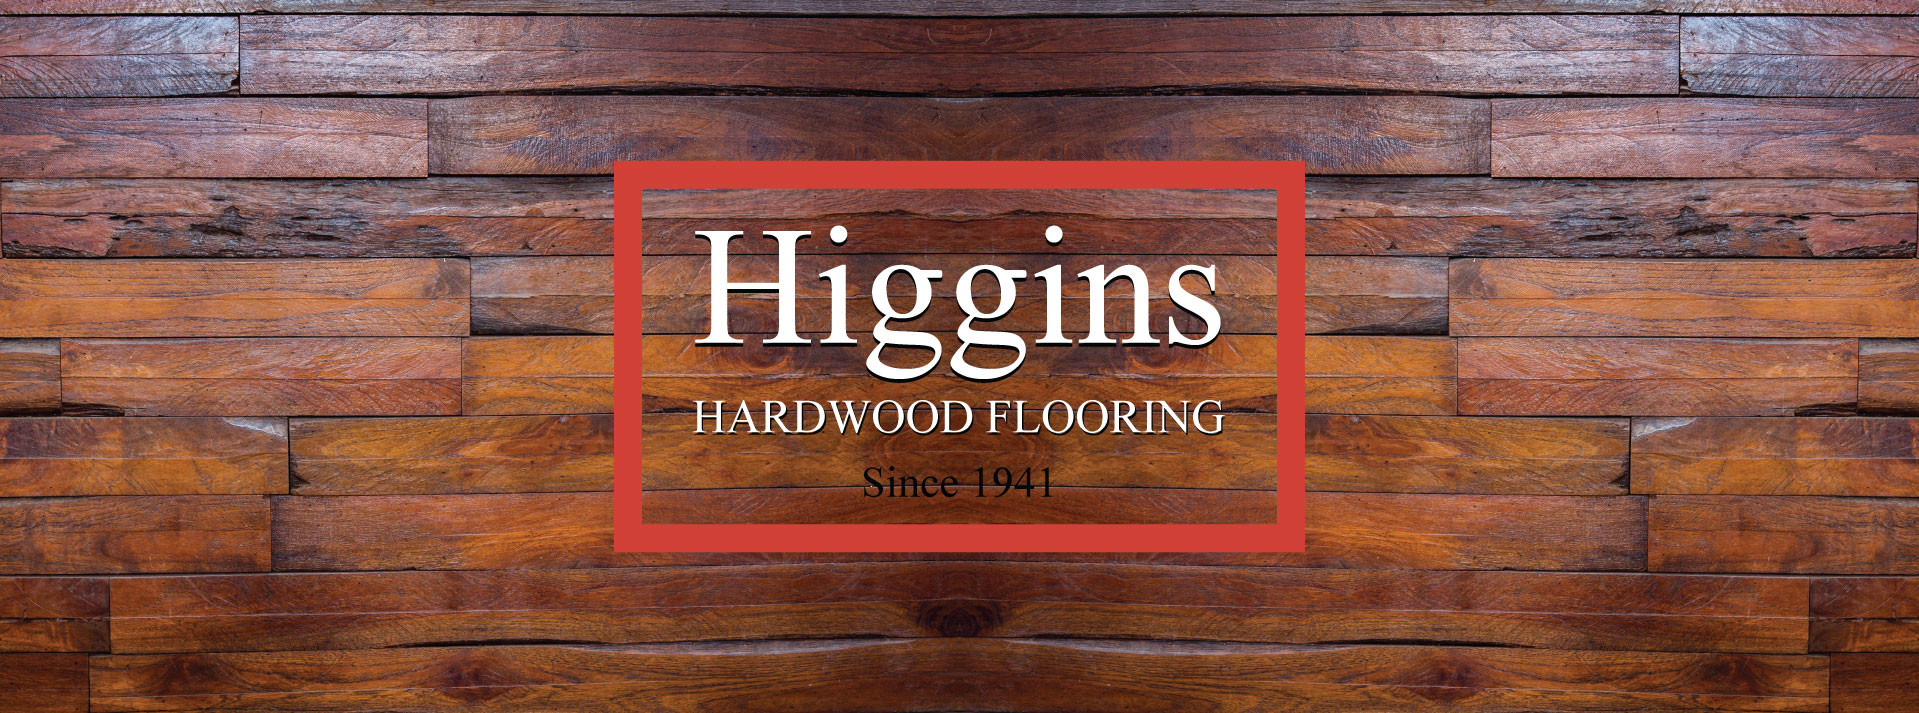 hardwood floor refinishing barrie of higgins hardwood flooring in peterborough oshawa lindsay ajax with office hours